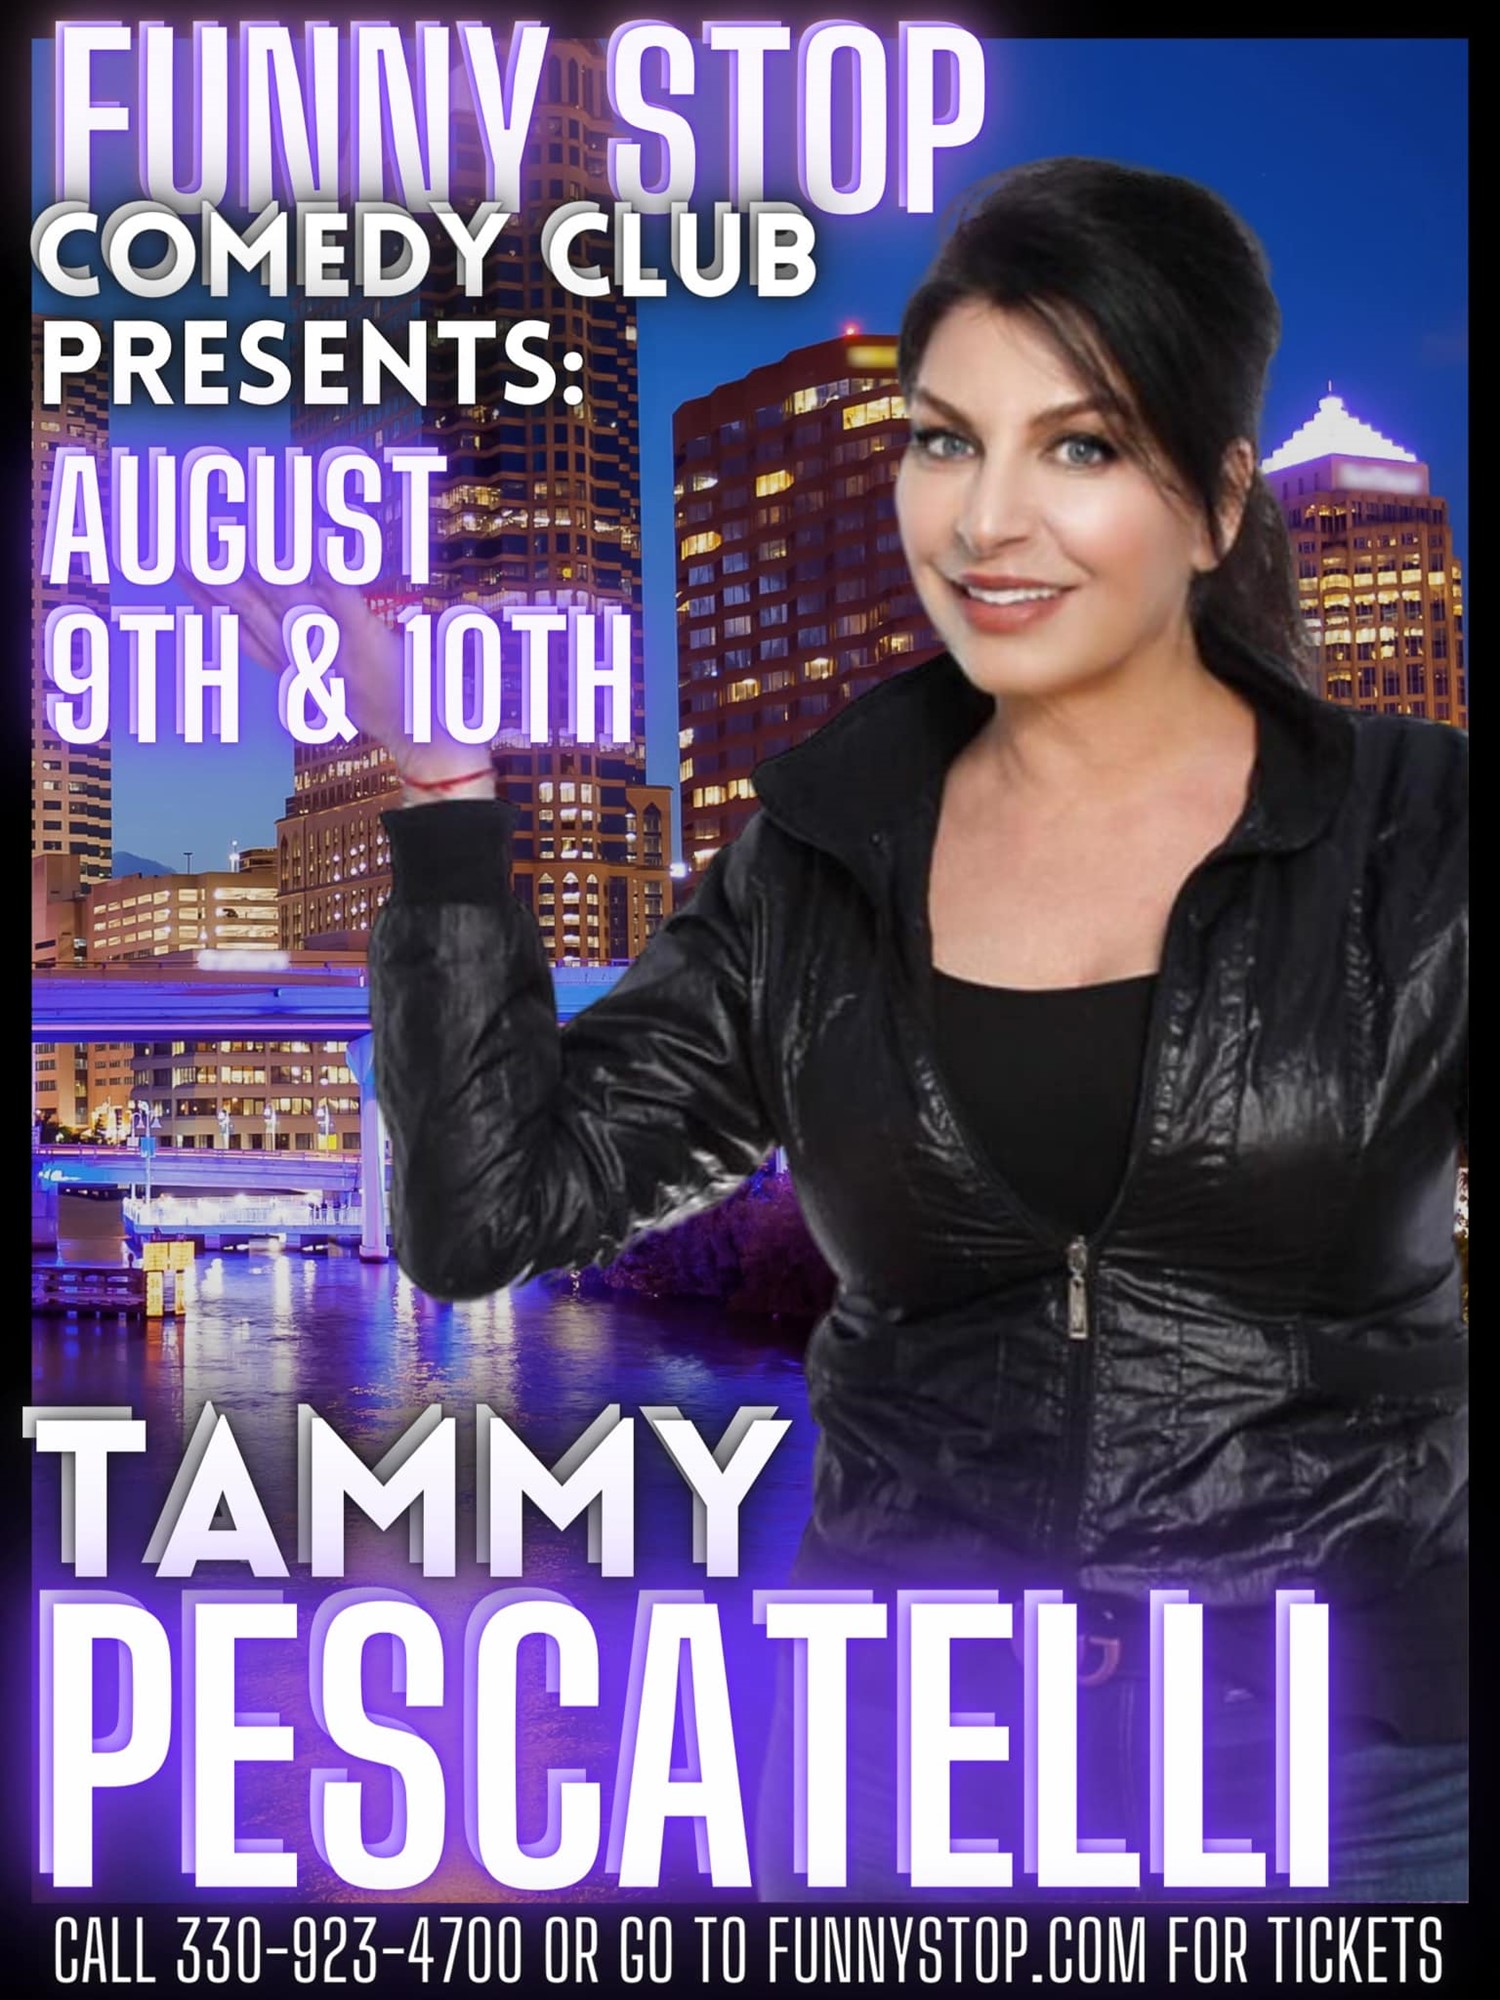 Tammy Pescatelli - Sat. 9:30 Show Funny Stop Comedy Club on ago. 10, 21:30@Funny Stop Comedy Club - Compra entradas y obtén información enFunny Stop funnystop.online